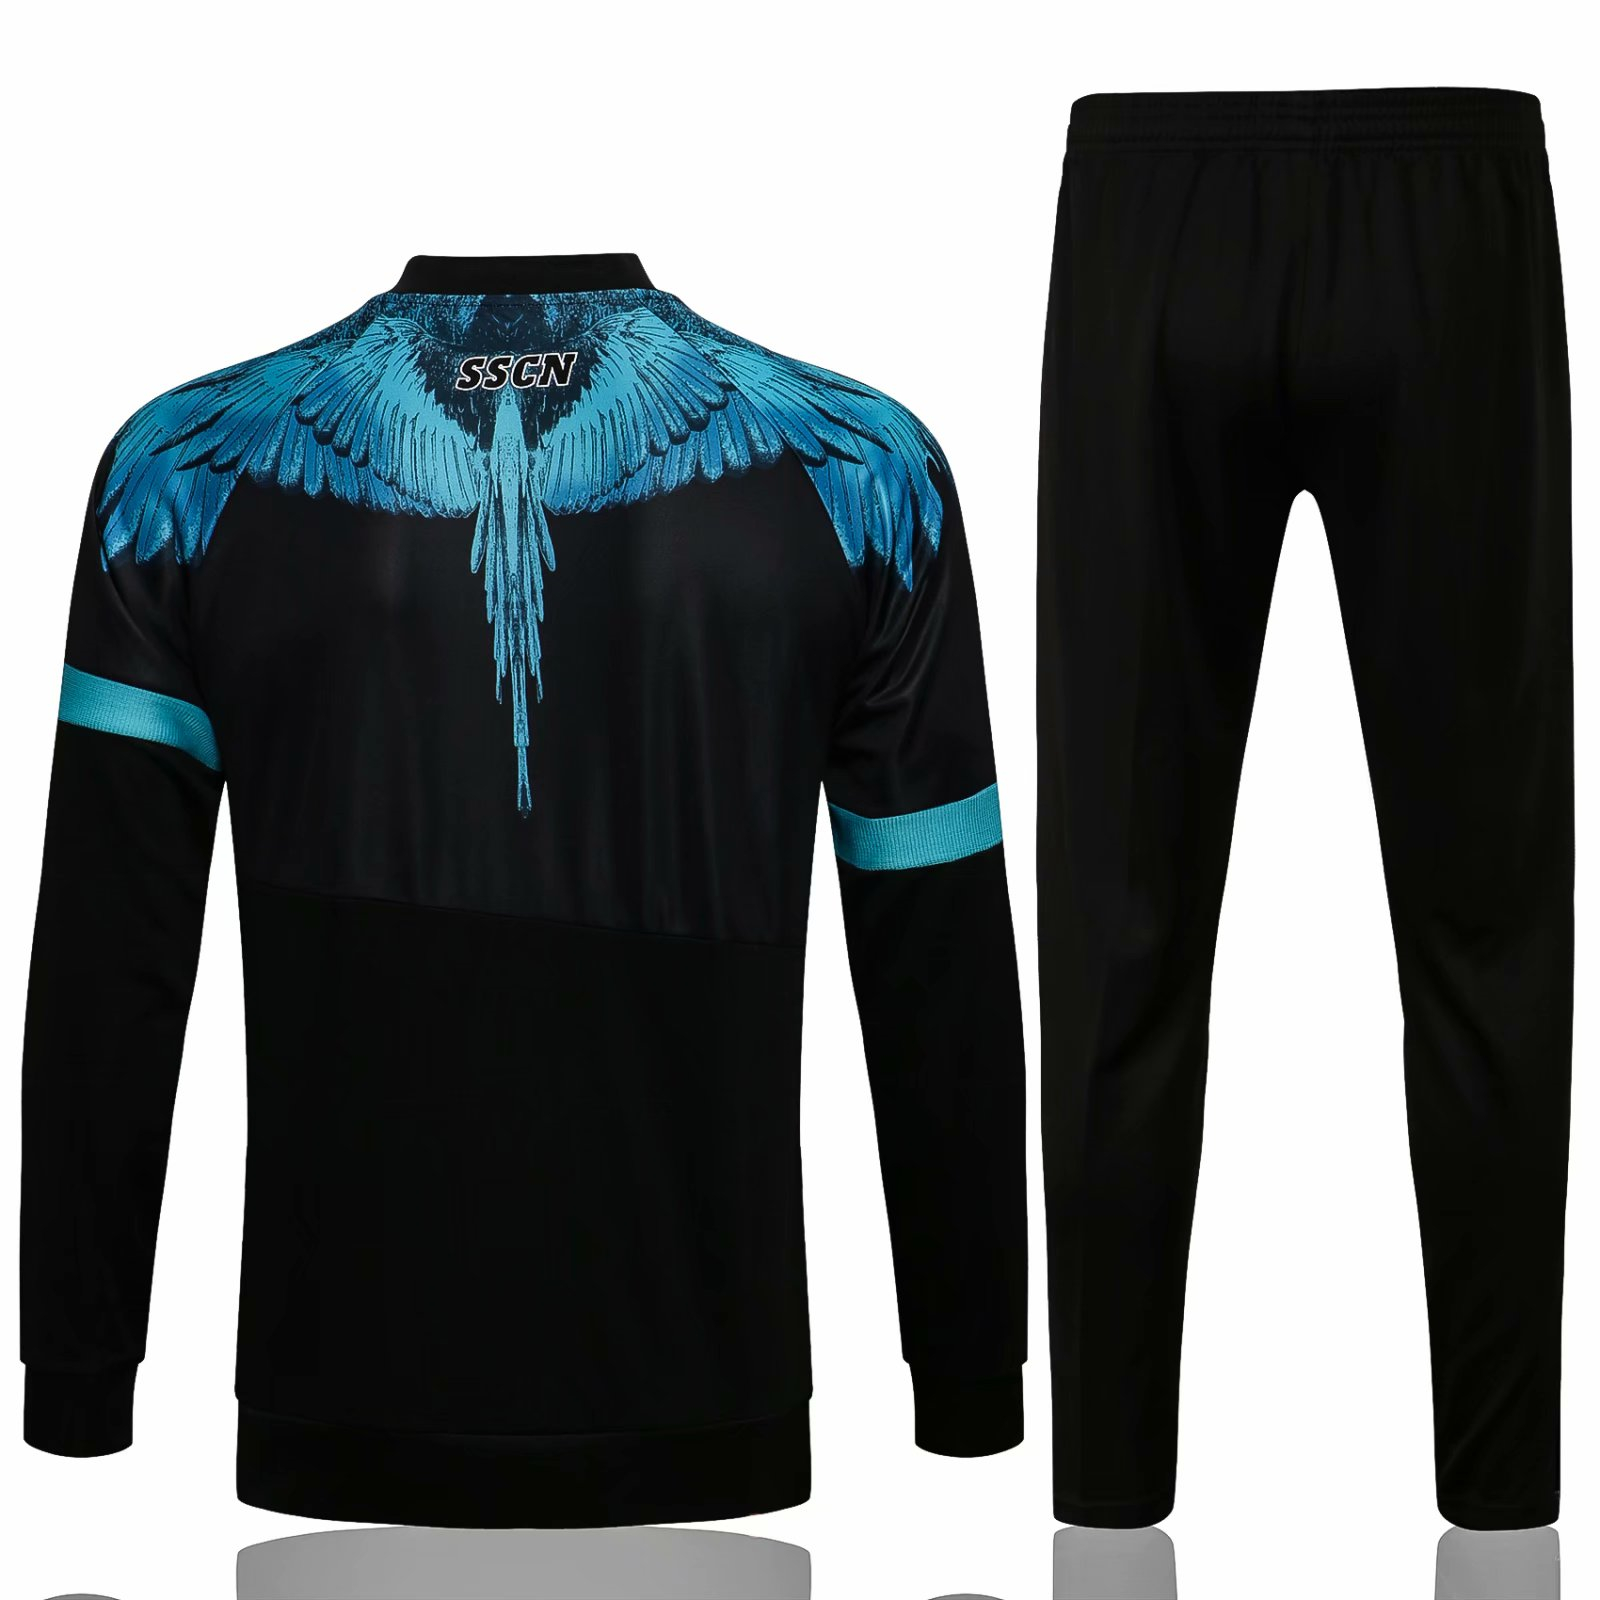 21/22 Napoli Black Soccer Training Suit(Jacket + Pants) Men's